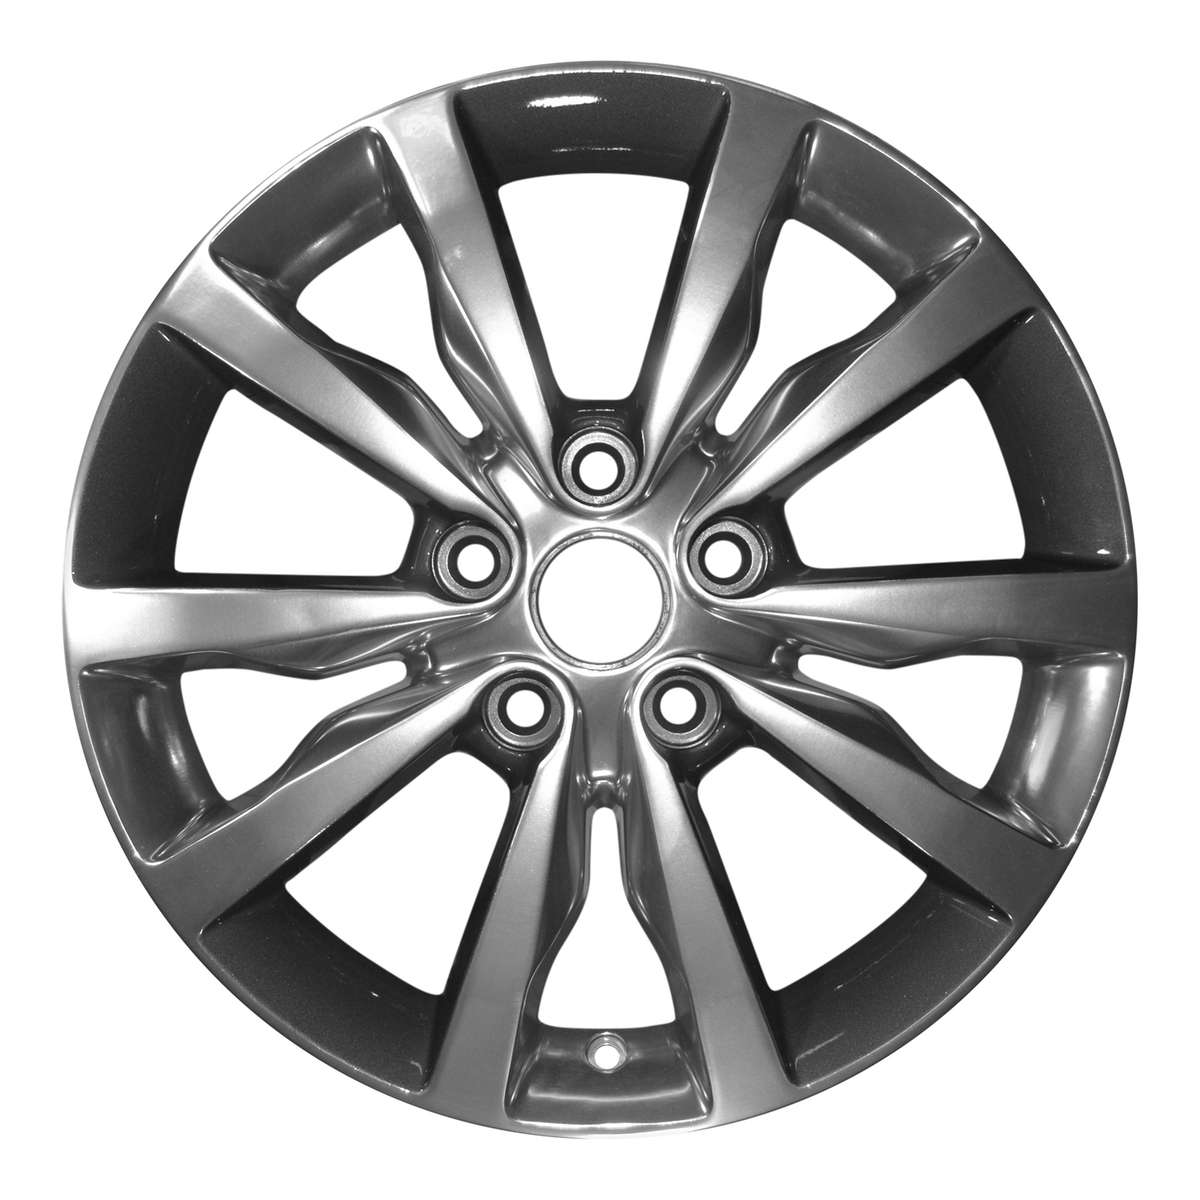 2014 Dodge Durango 18" OEM Wheel Rim W2492APC